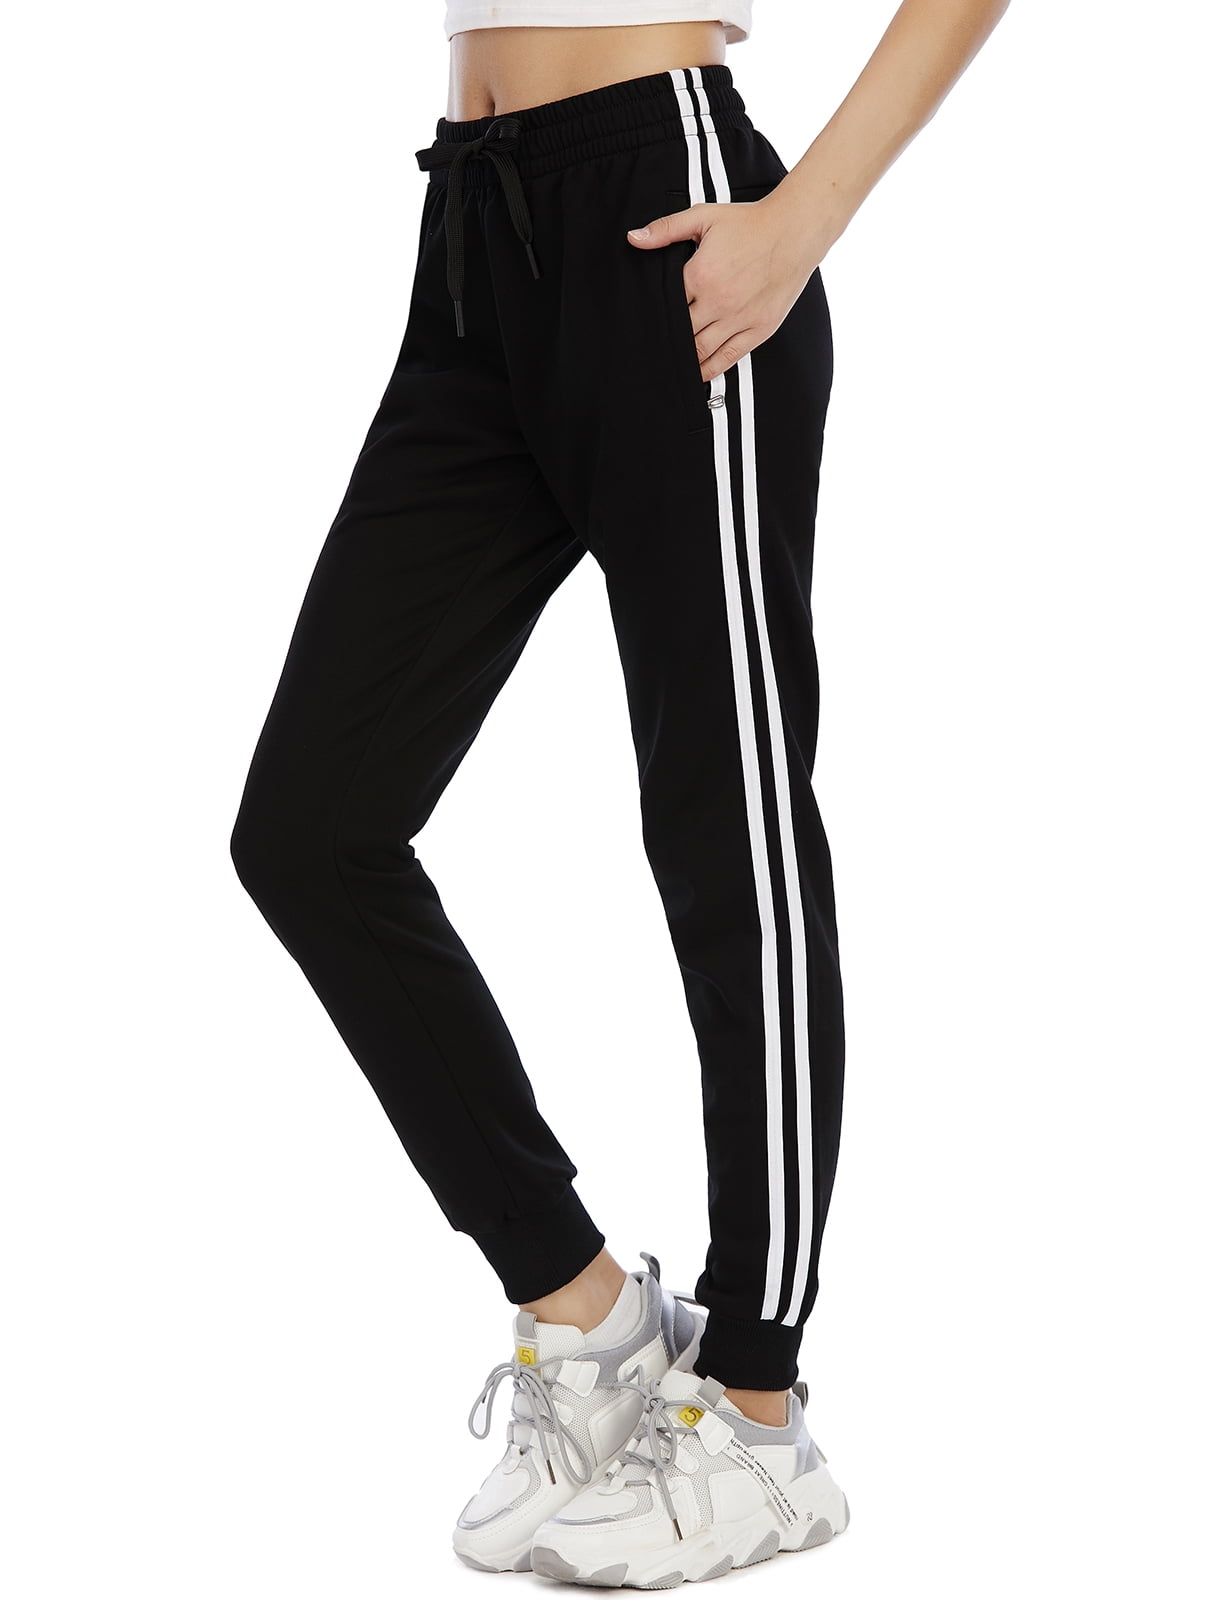 Bohuma Women's Sweatpants Joggers Pants Cotton Lightweight Breathable Soft for Running Pants 